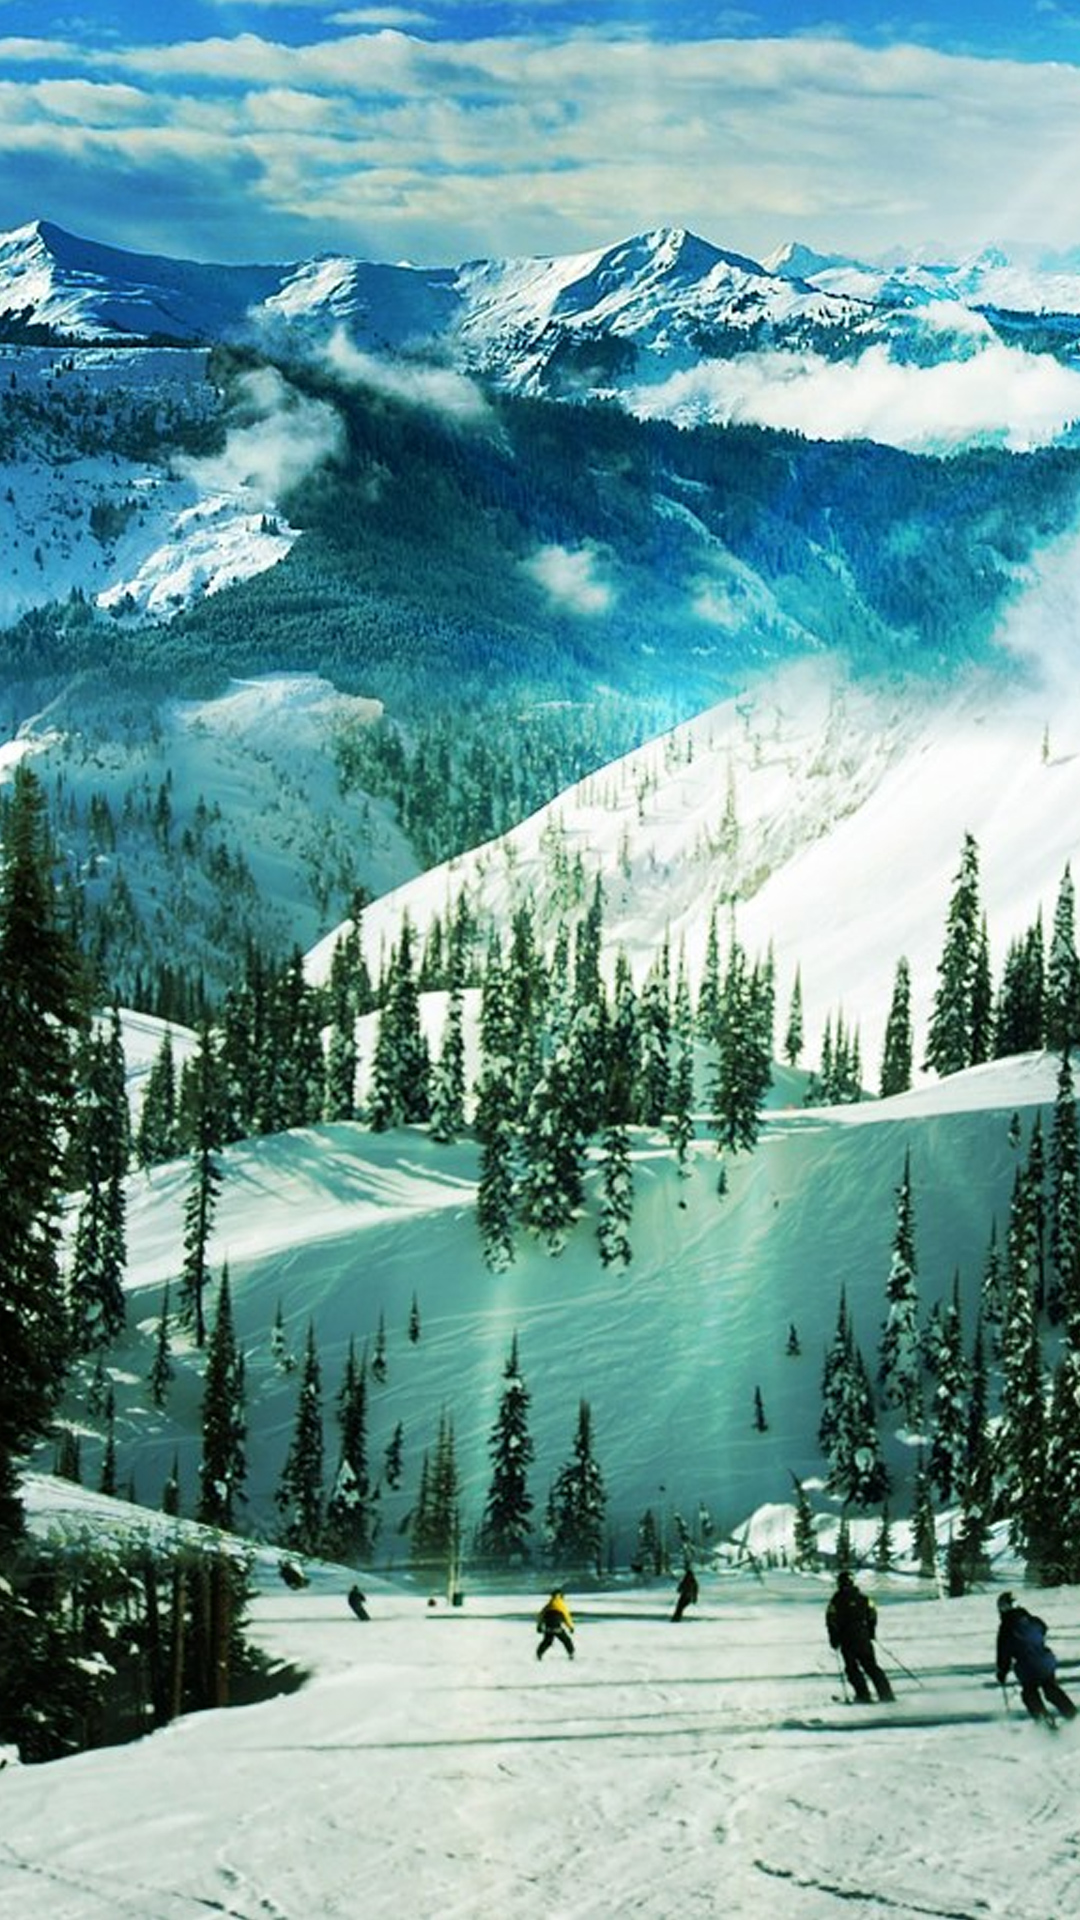 Ski Slope Paradise Winter Landscape iPhone Plus HD Wallpaper Ipod